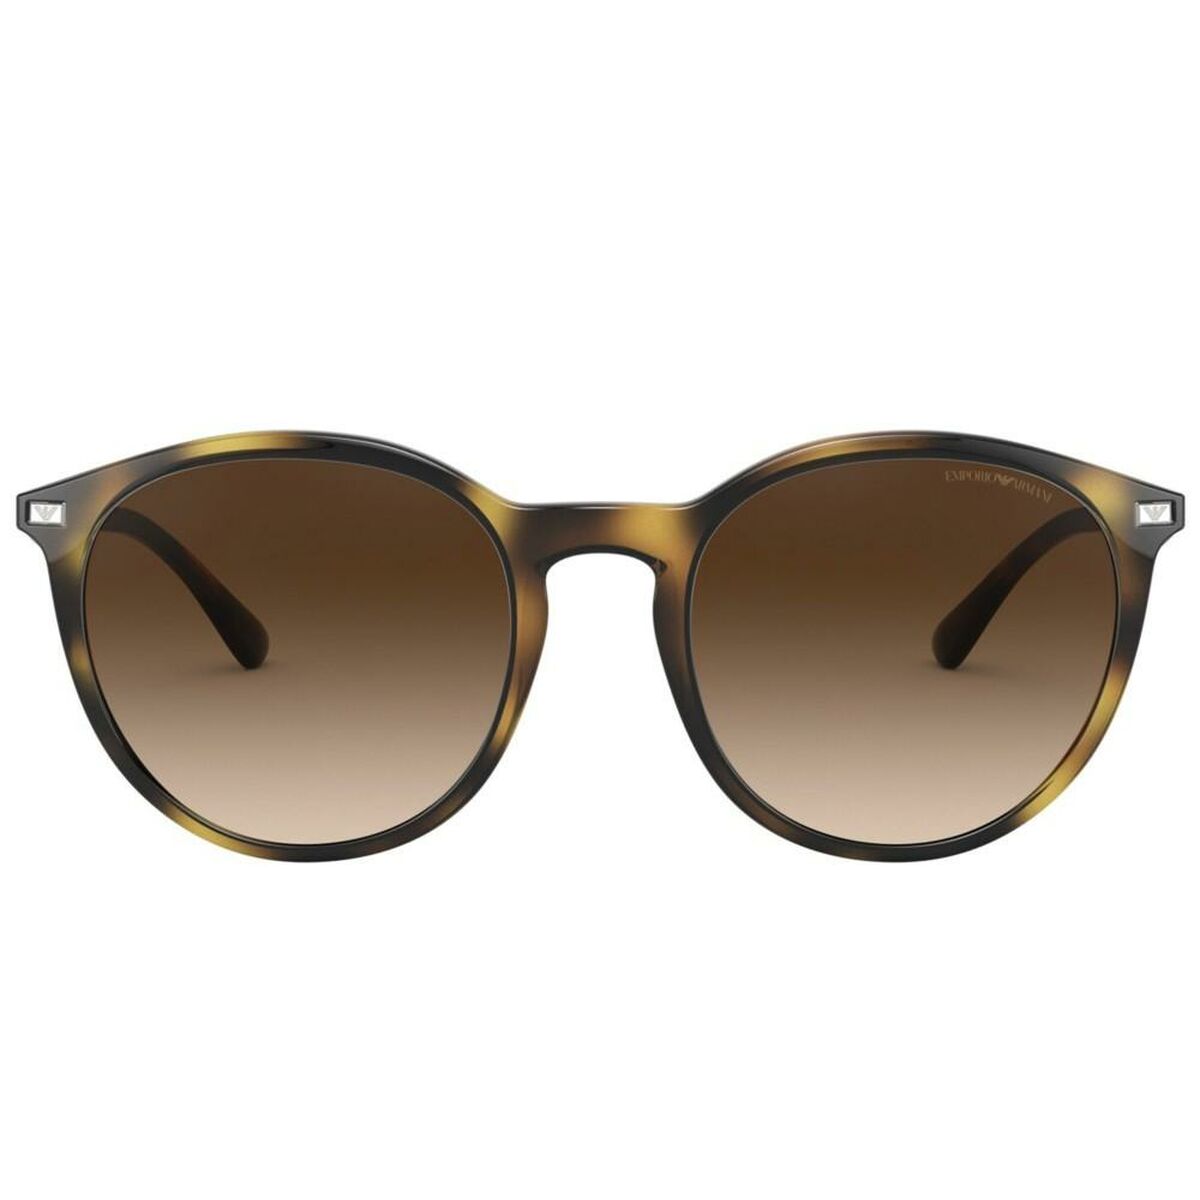 Kaufe Damensonnenbrille Armani EA 4148 bei AWK Flagship um € 167.00